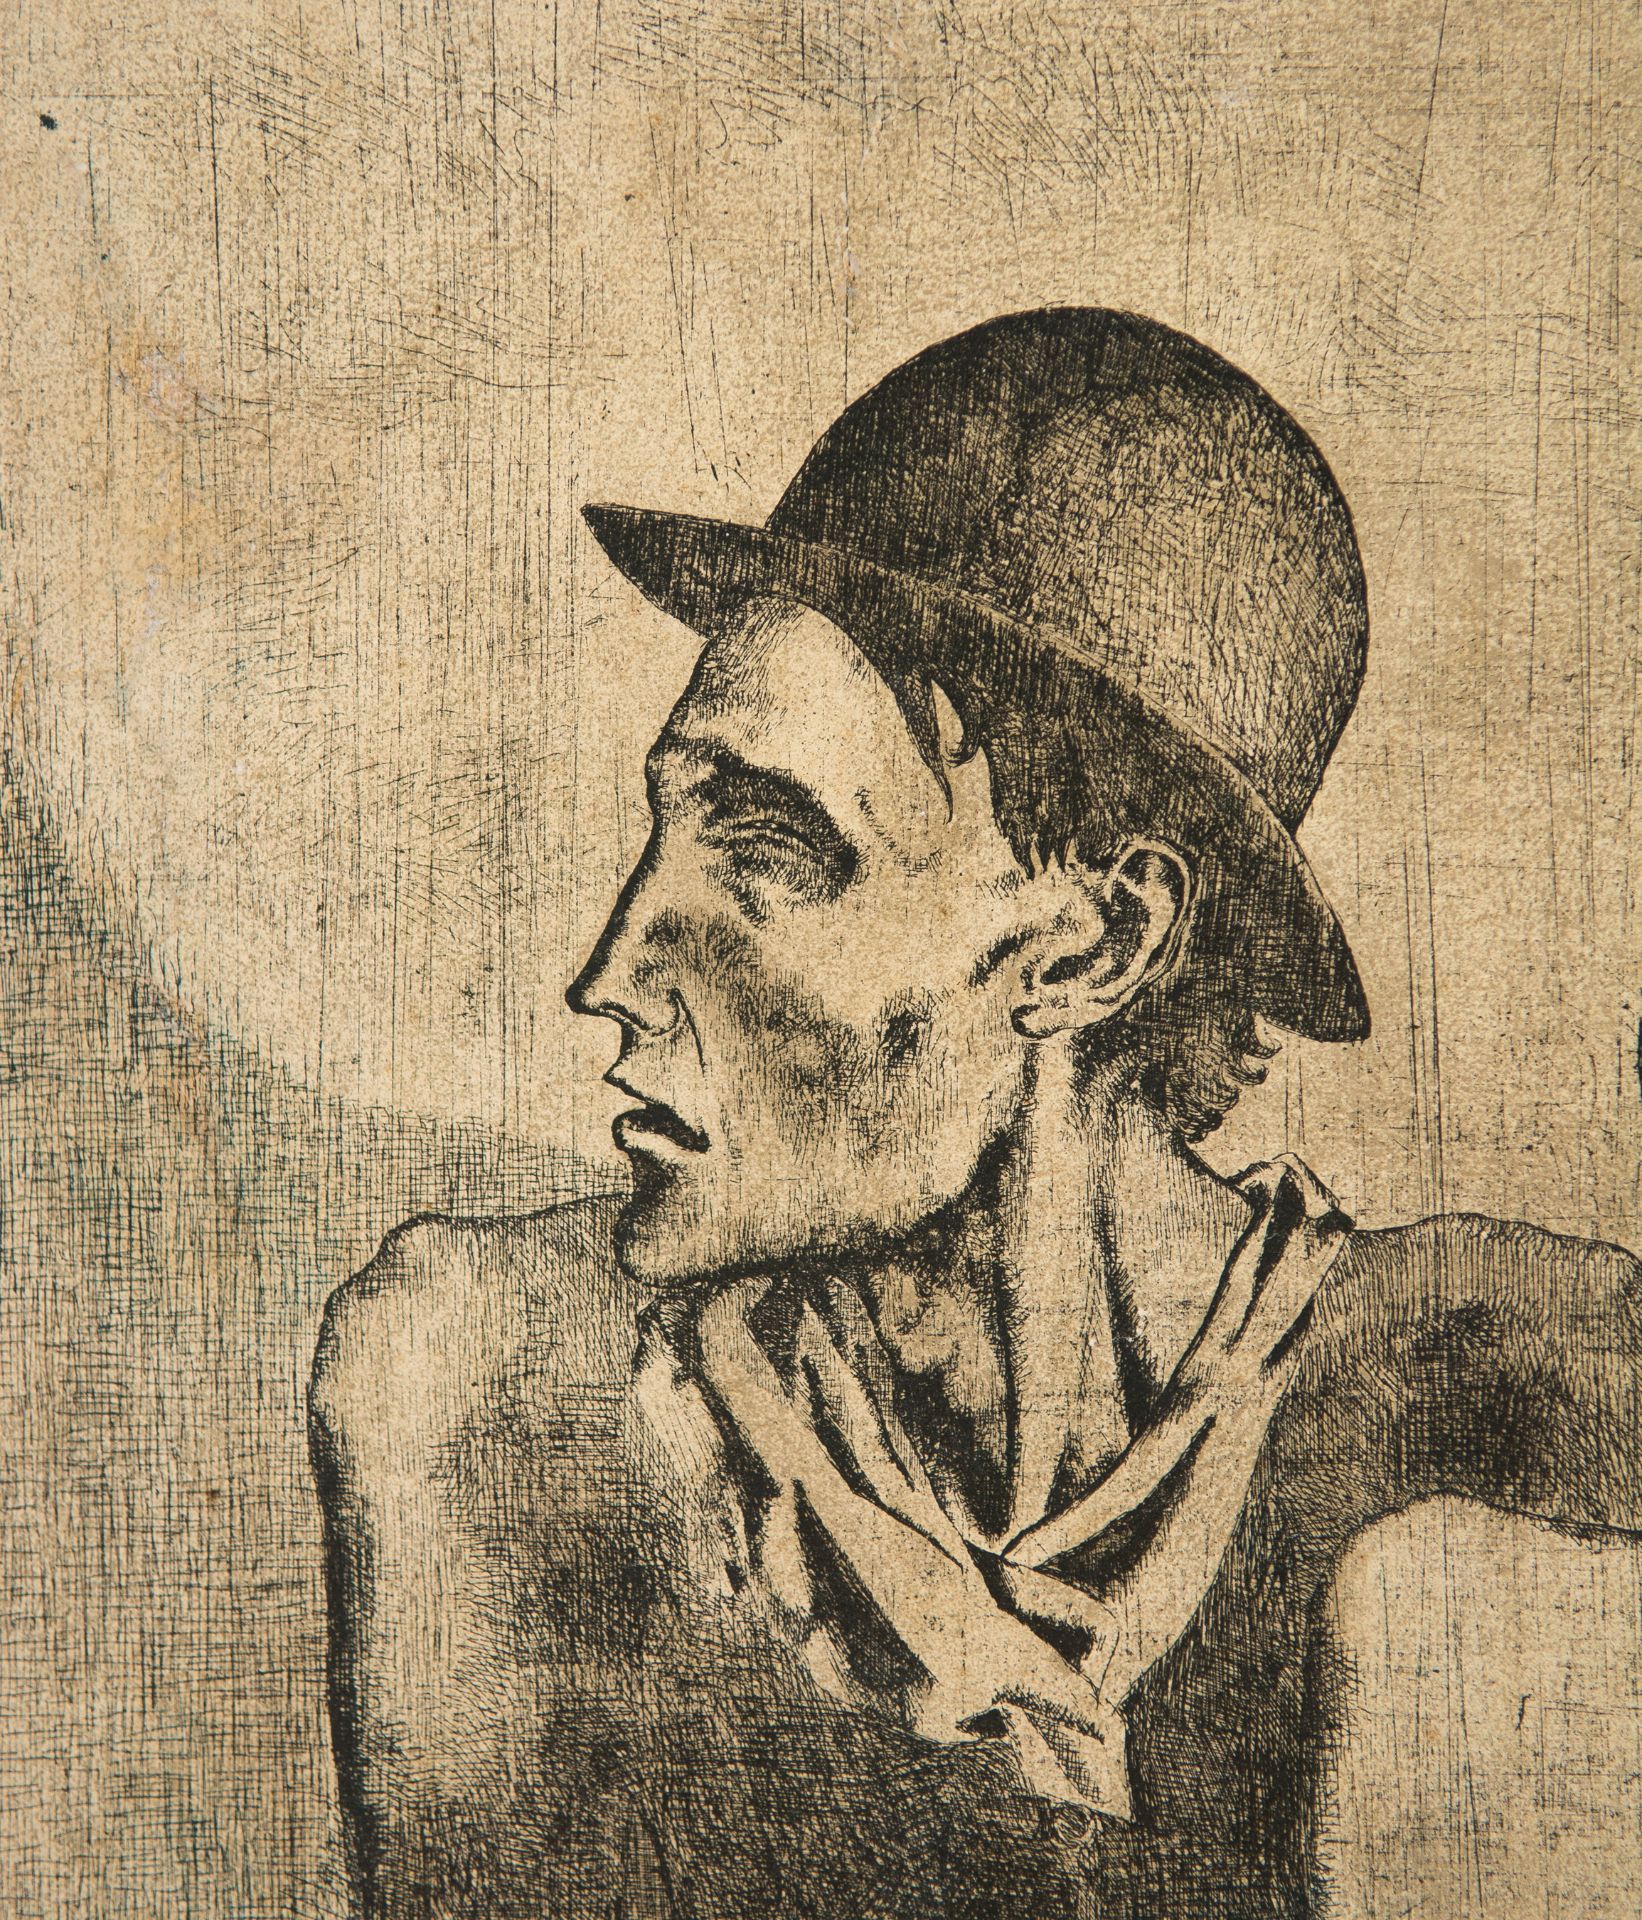 Pablo Ruiz Picasso (Malaga, 1881 - Mougins, 1973) - Image 3 of 8